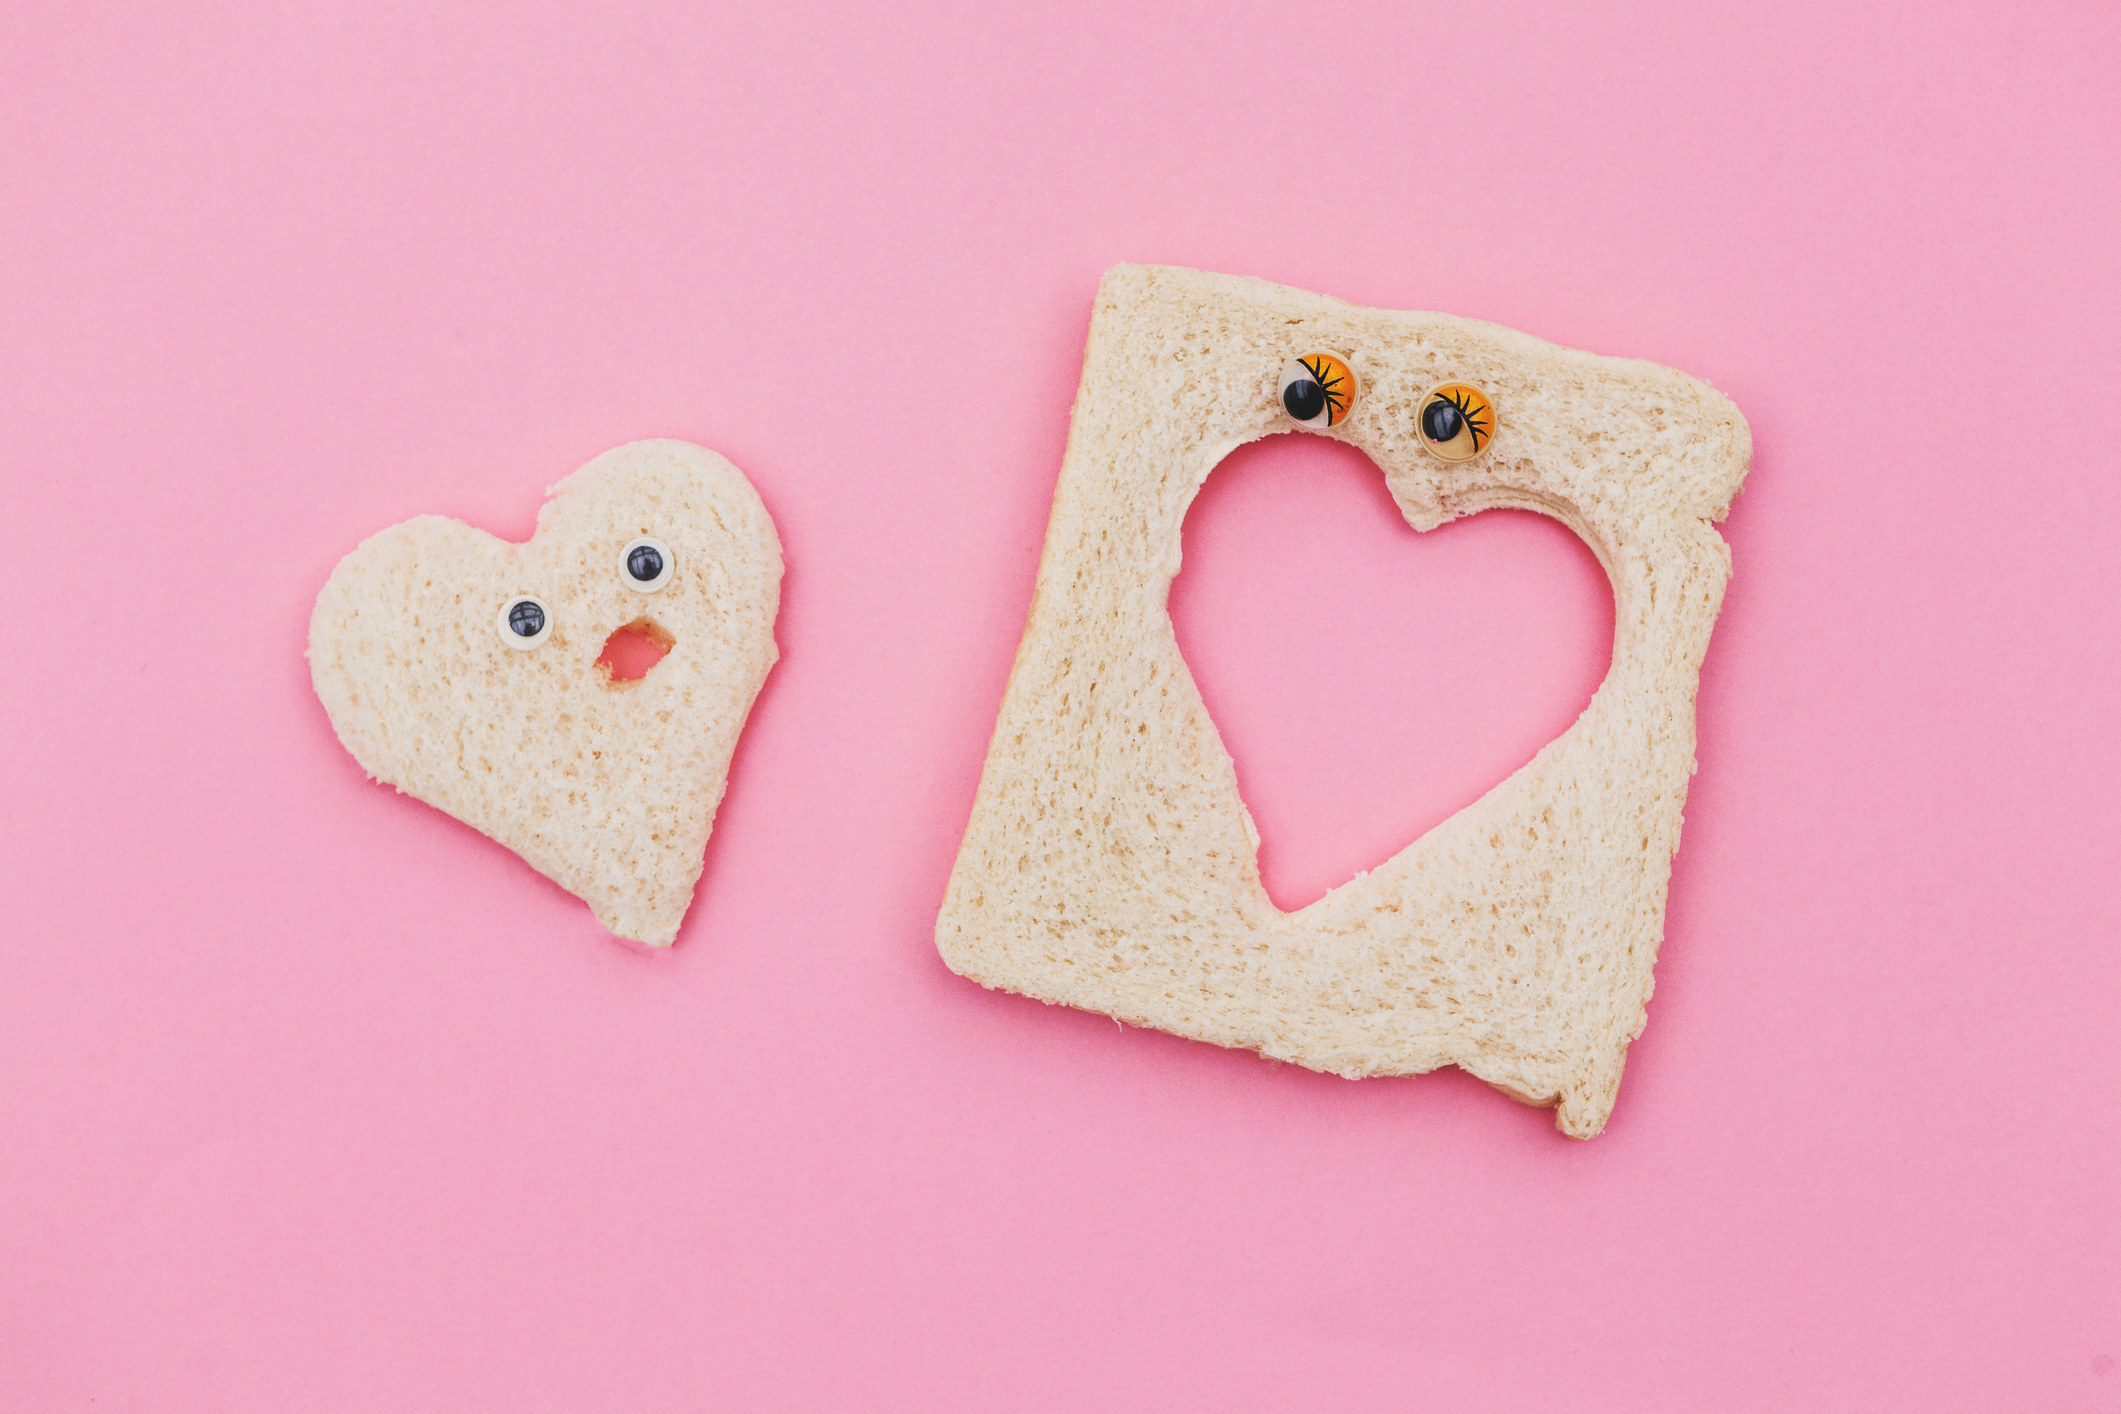 Heart-shaped bread